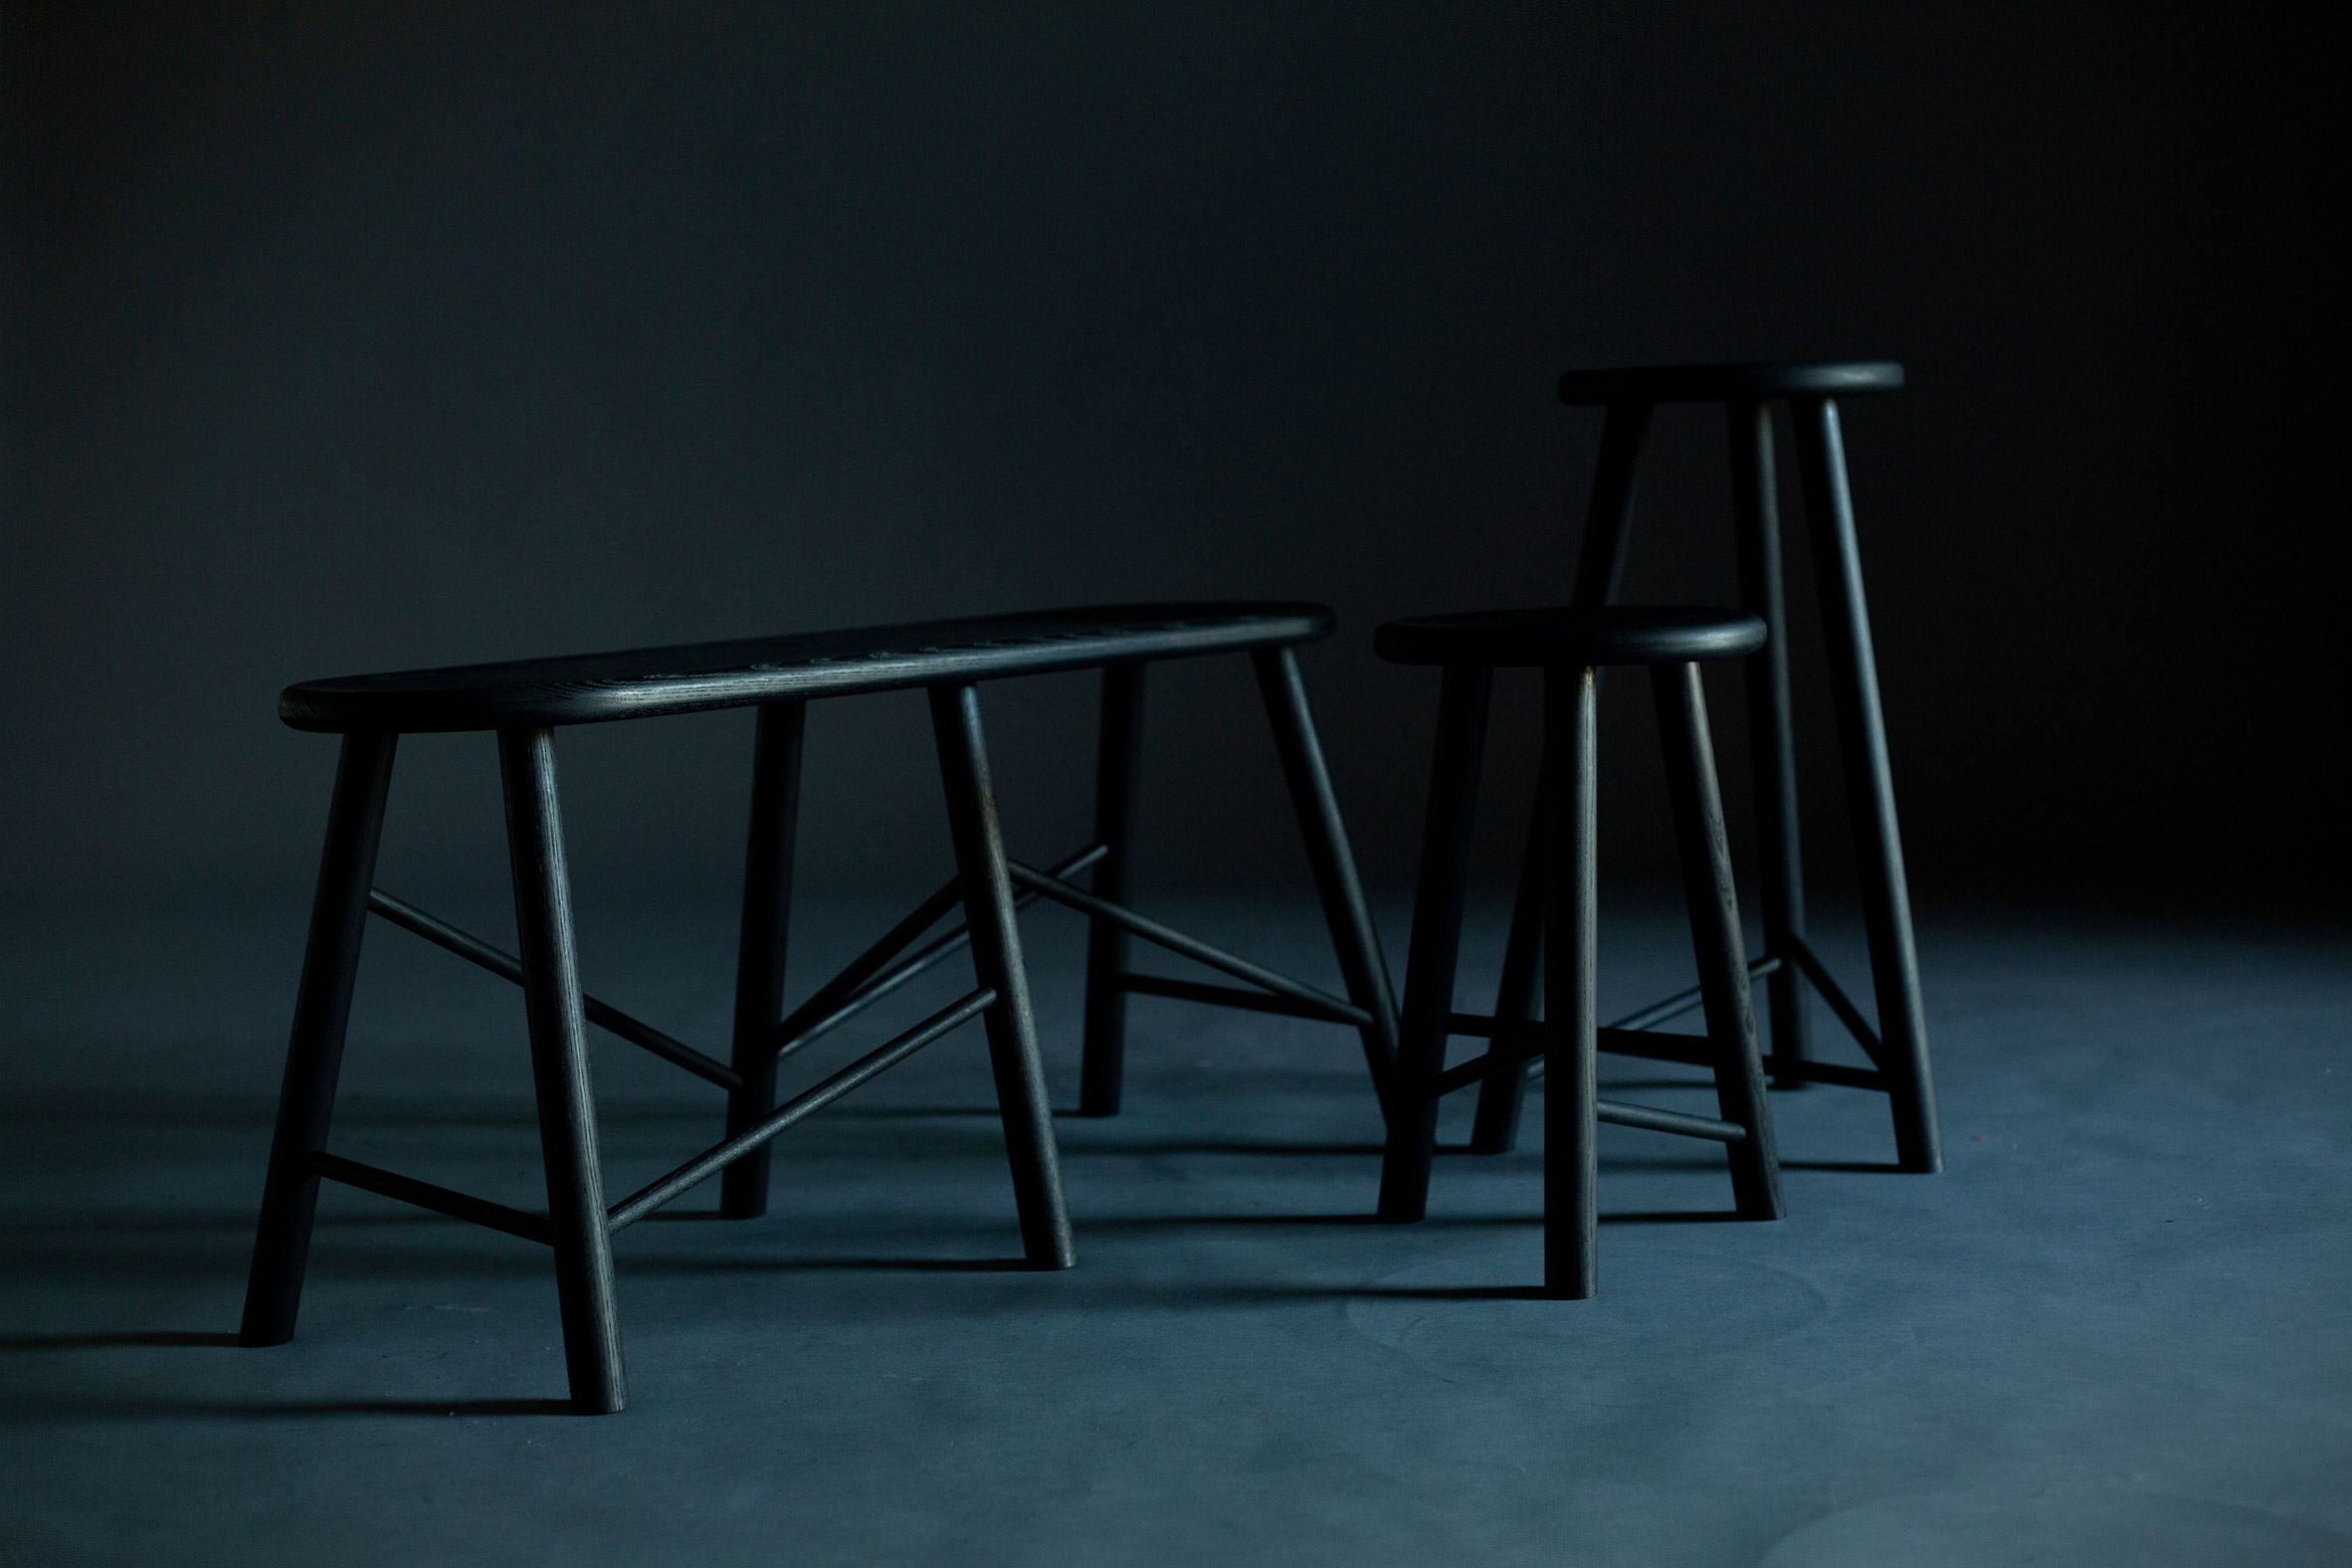  A photograph of a black furniture range